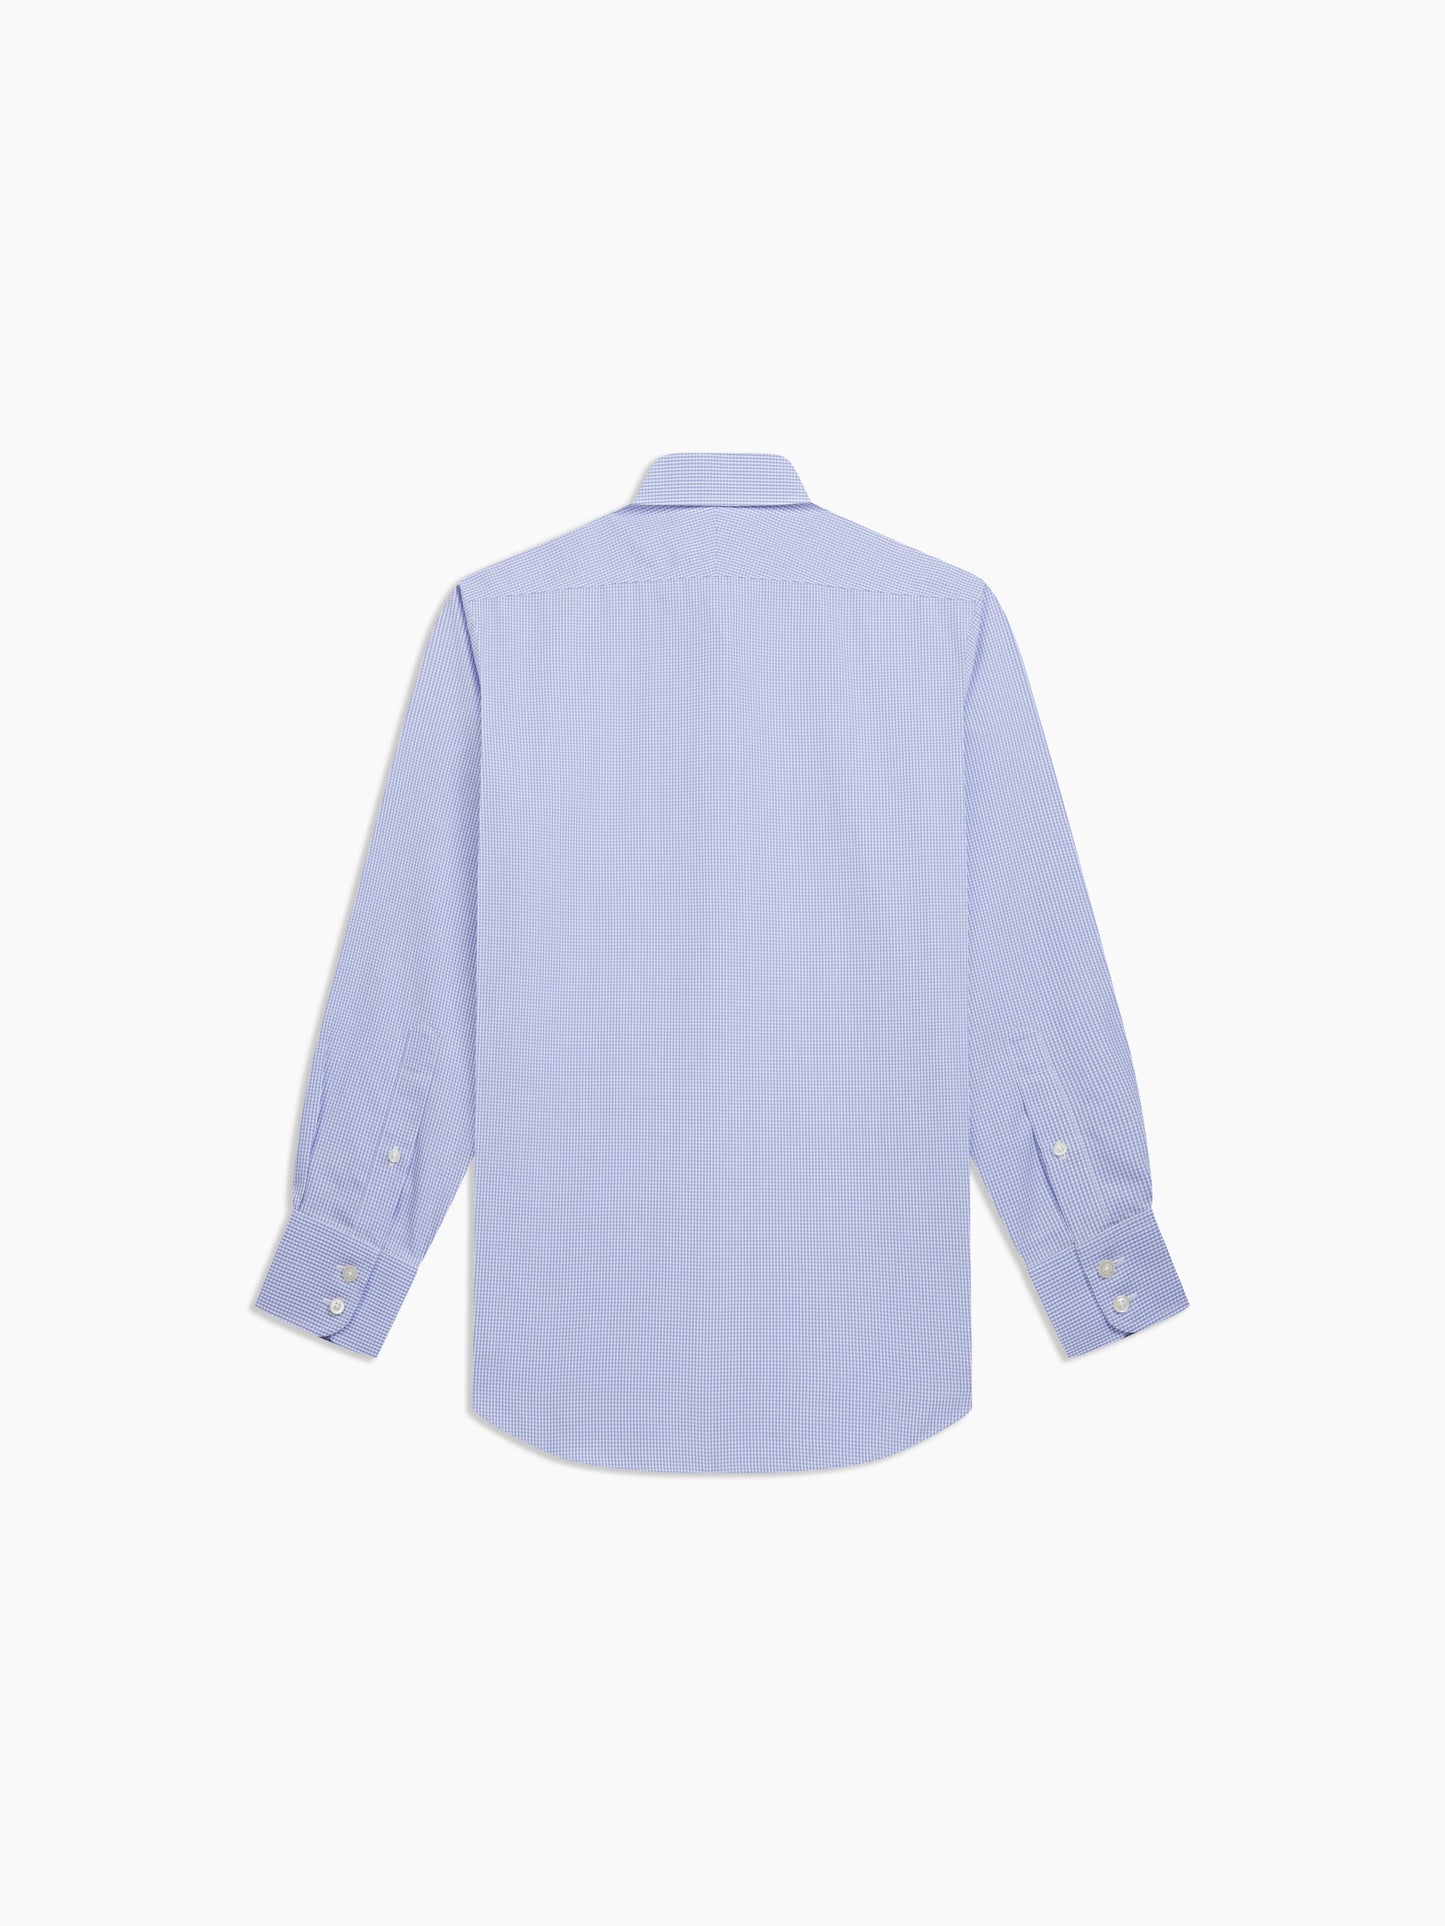 Image 1 of Non-Iron Light Blue Gingham Dobby Slim Fit Single Cuff Classic Collar Shirt